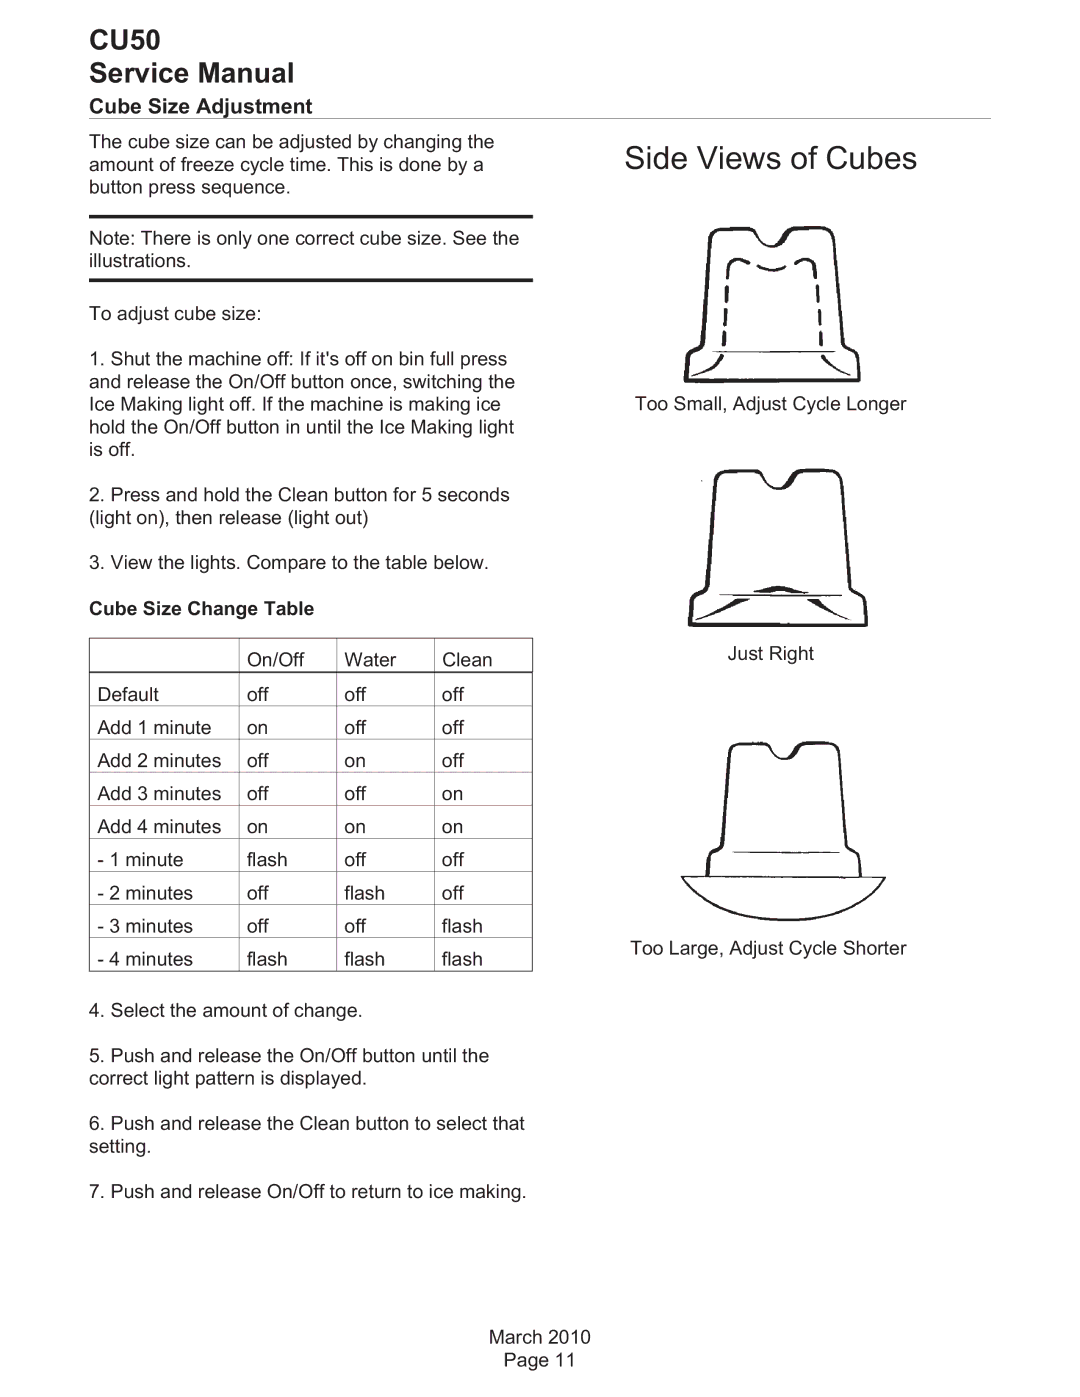 Scotsman Ice CU50 service manual Cube Size Adjustment, Cube Size Change Table 